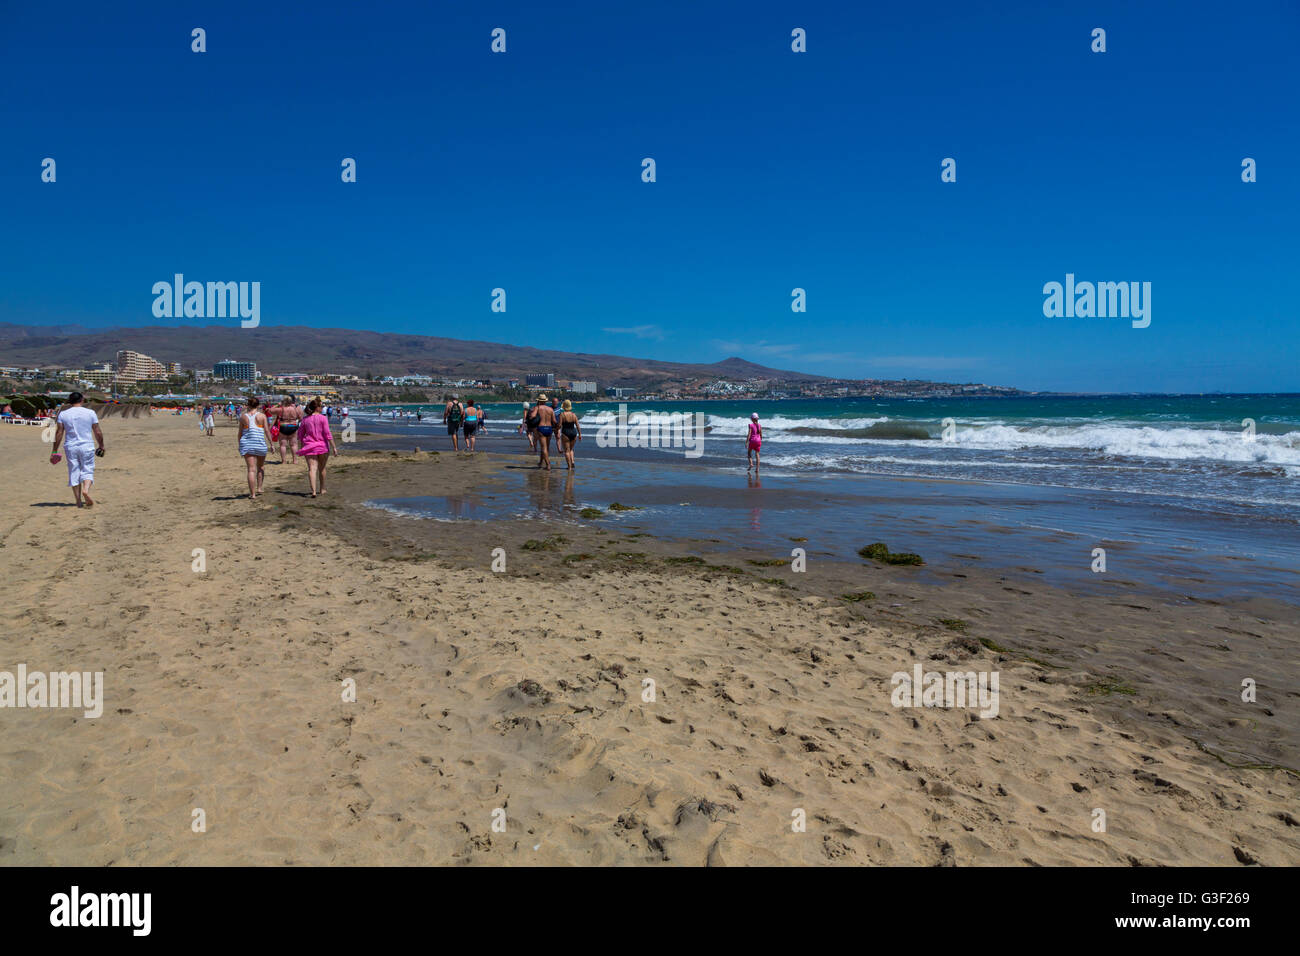 The beaches of Maspalomas, sand dunes, Maspalomas, Gran Canaria, Spain, Europe Stock Photo